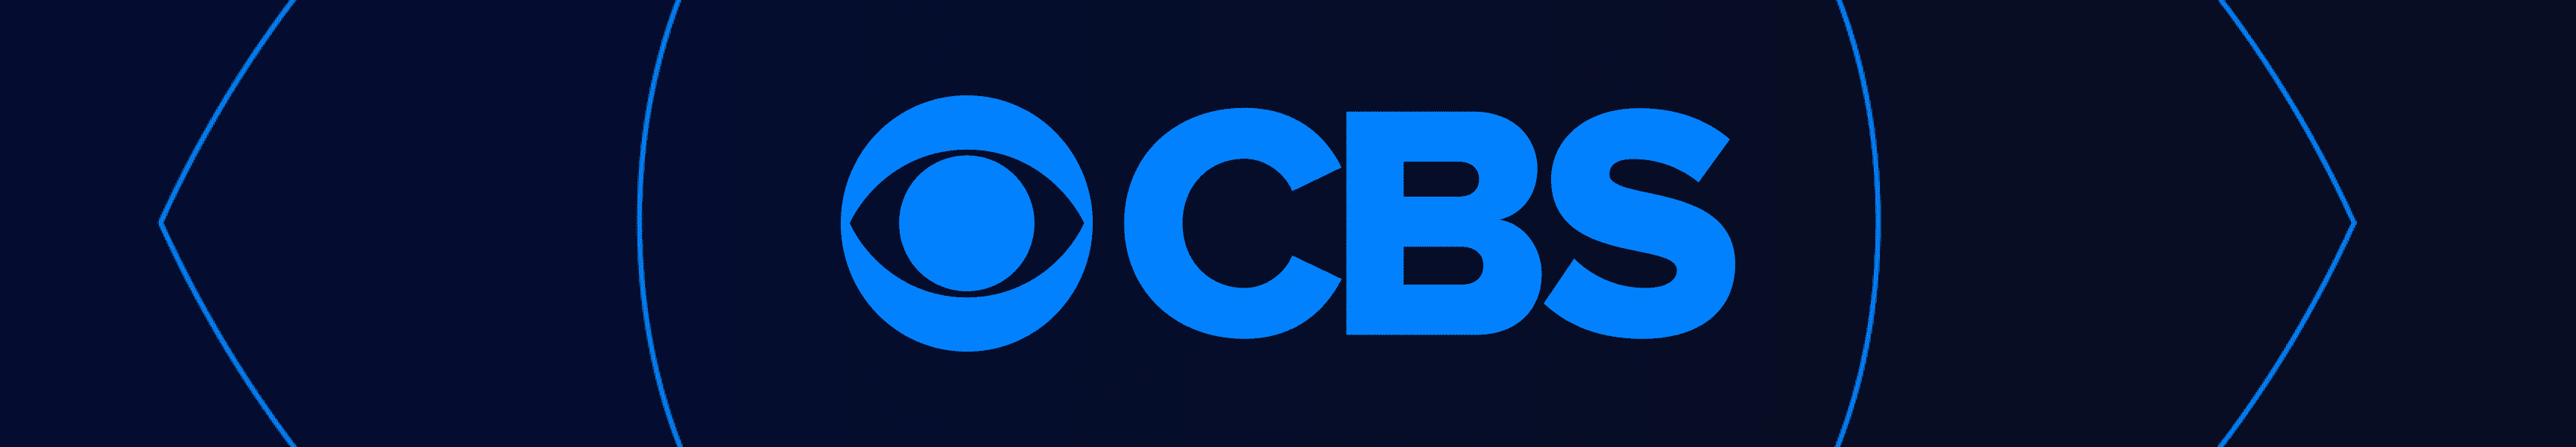 CBS Entertainment Batas